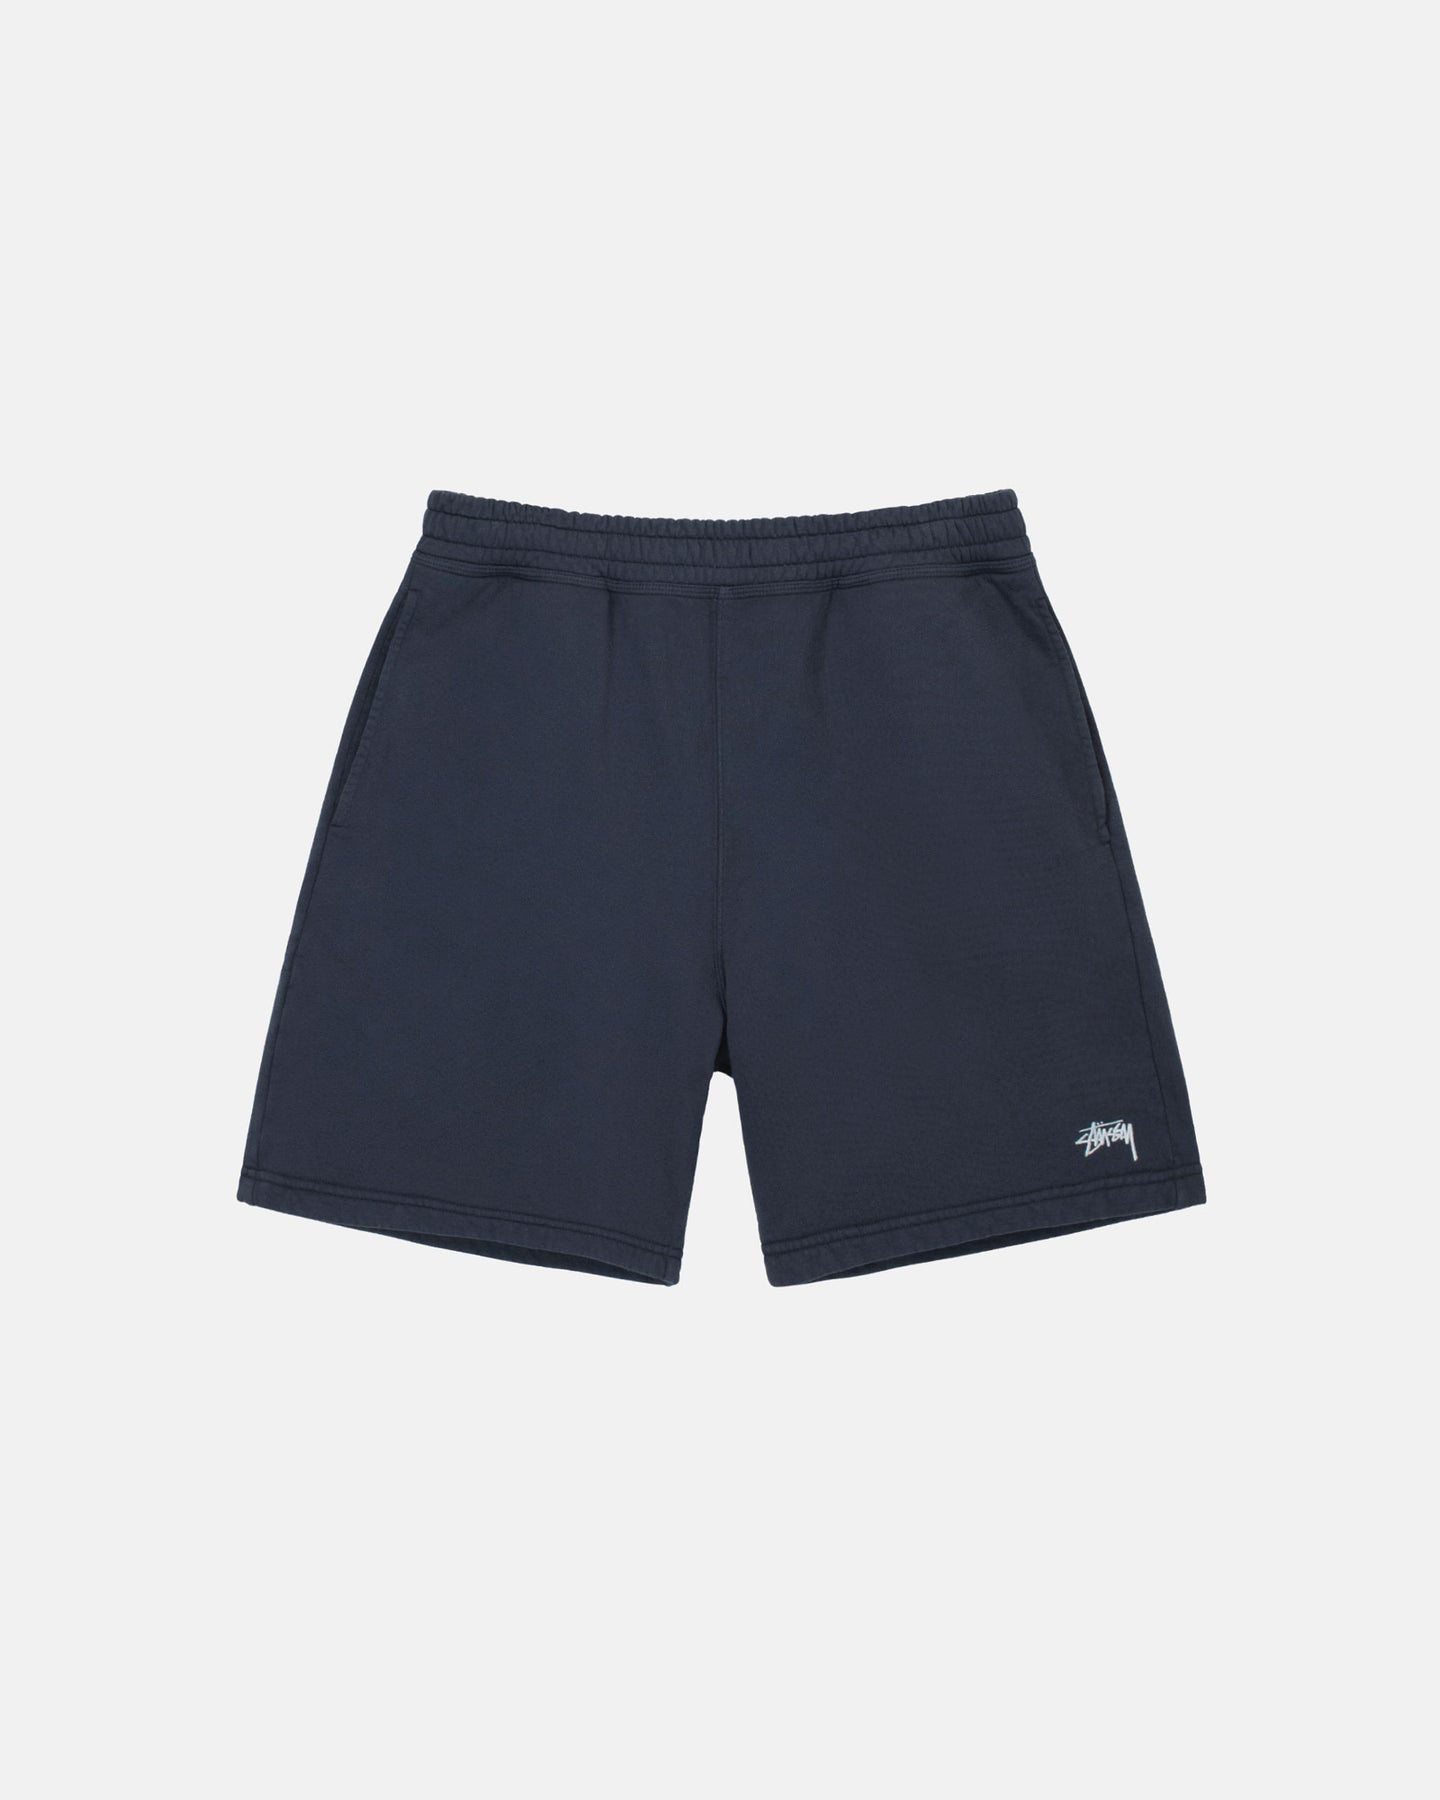 Overdyed Stock Logo Sweat Short - Men's Shorts & Trunks | Stüssy